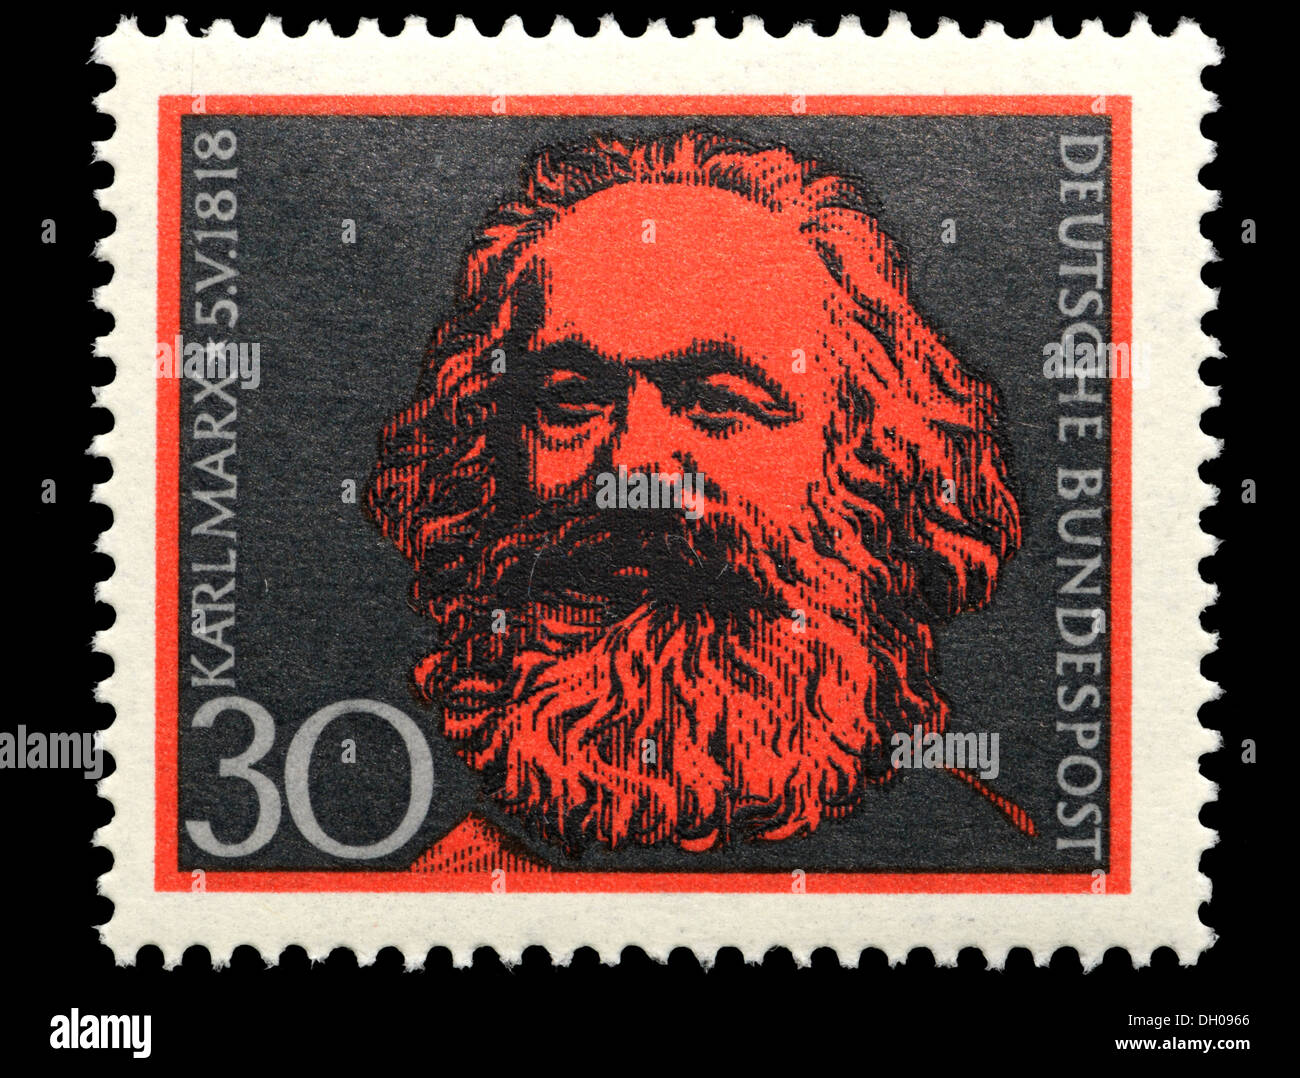 Portrait of Karl Marx (1818-83: German philosopher and revolutionary socialist) on German postage stamp. Stock Photo